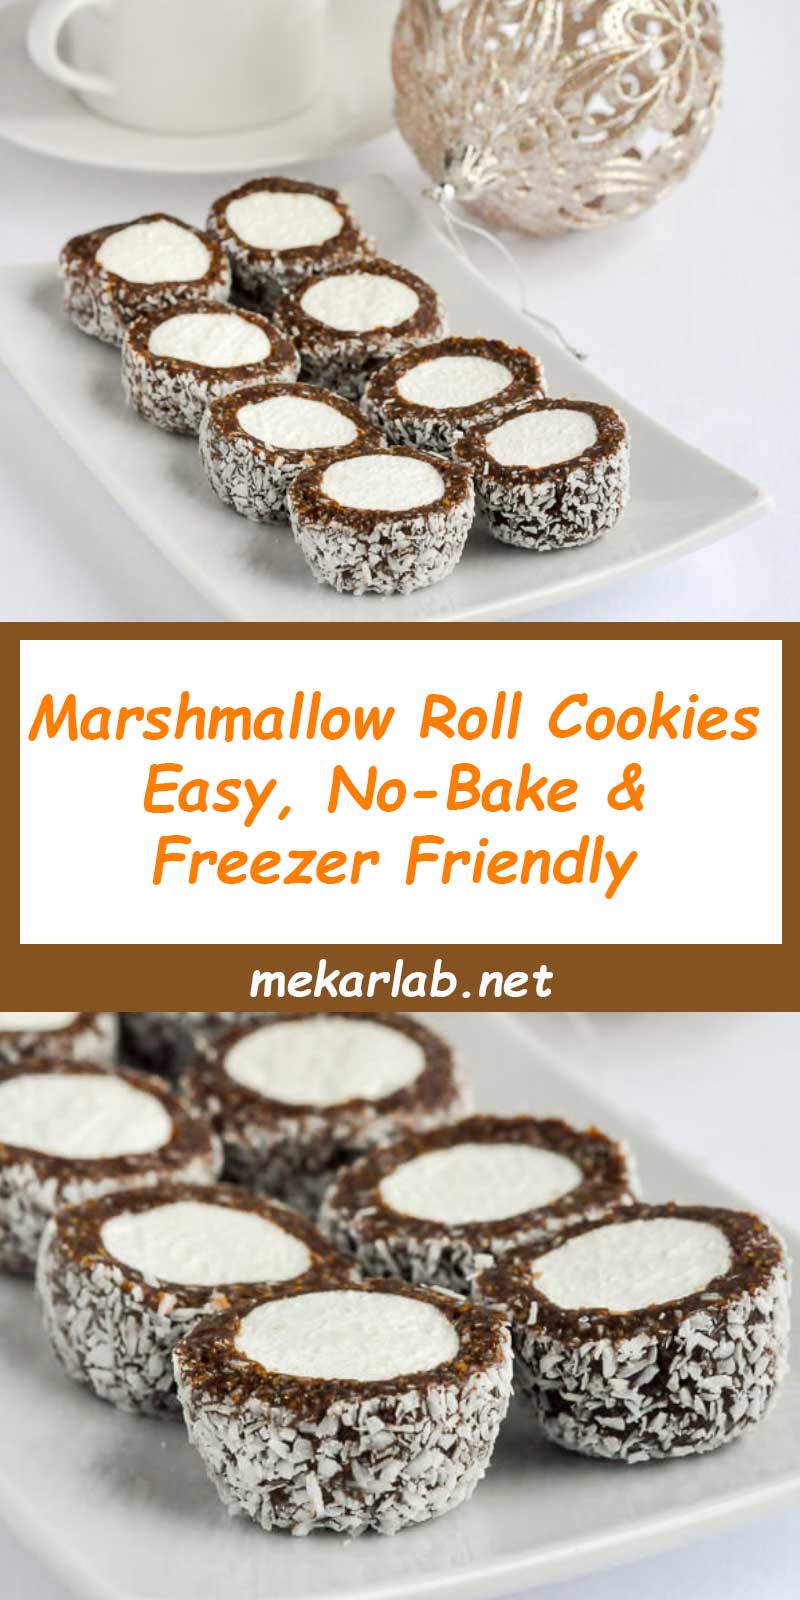 Marshmallow Roll Cookies - Easy, No-Bake & Freezer Friendly!